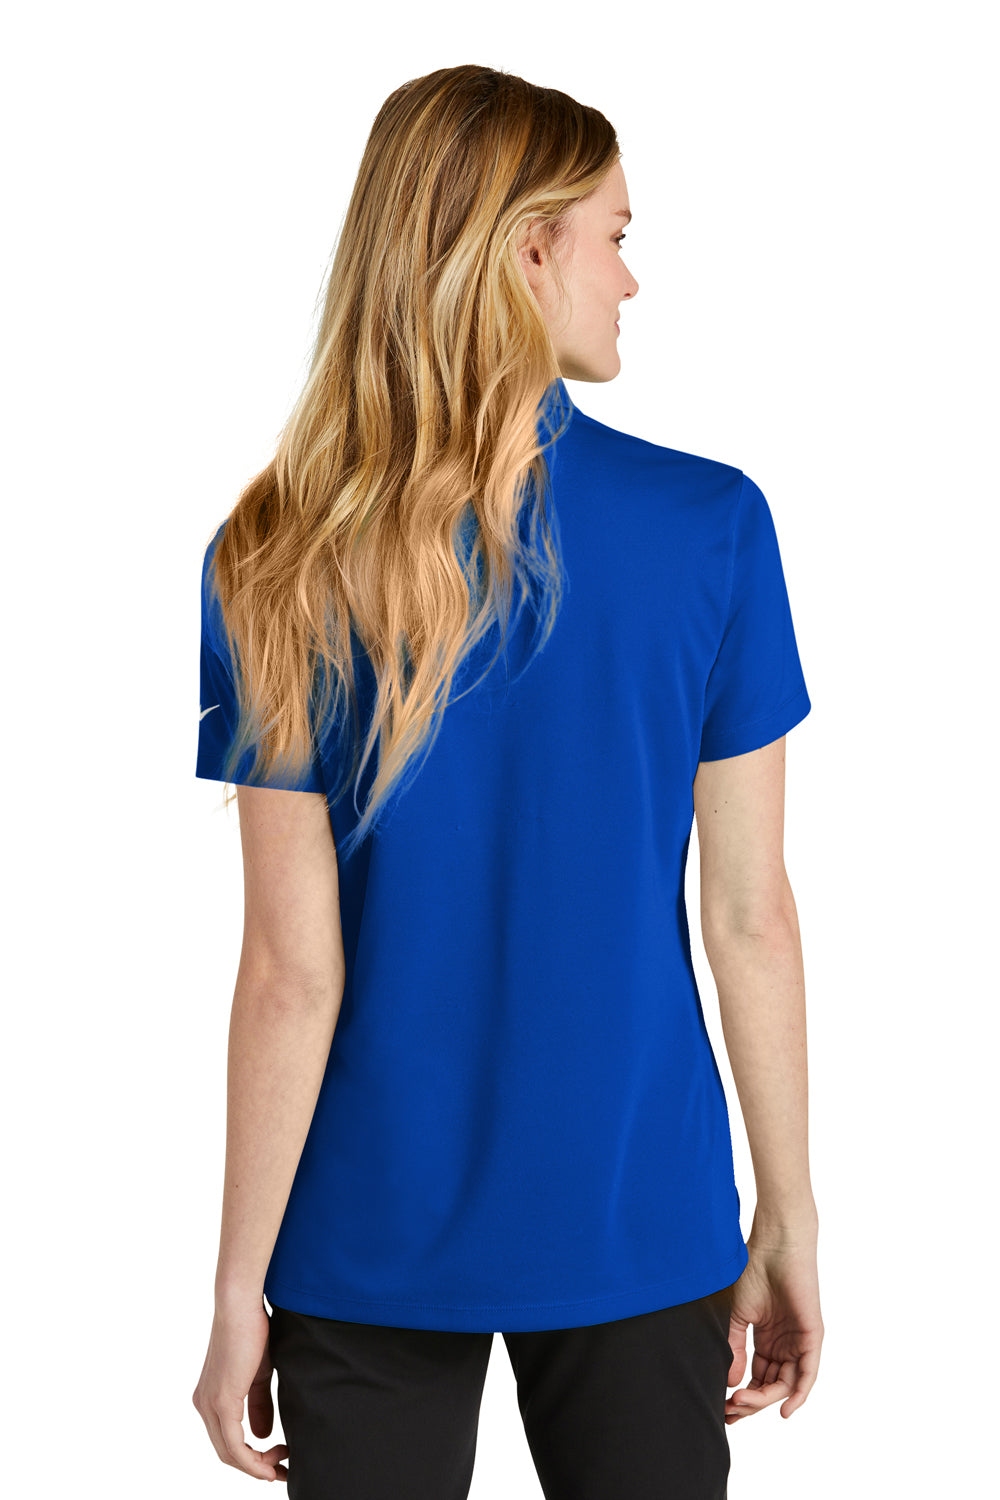 Nike NKDC1991 Womens Dri-Fit Moisture Wicking Micro Pique 2.0 Short Sleeve Polo Shirt Game Royal Blue Model Back